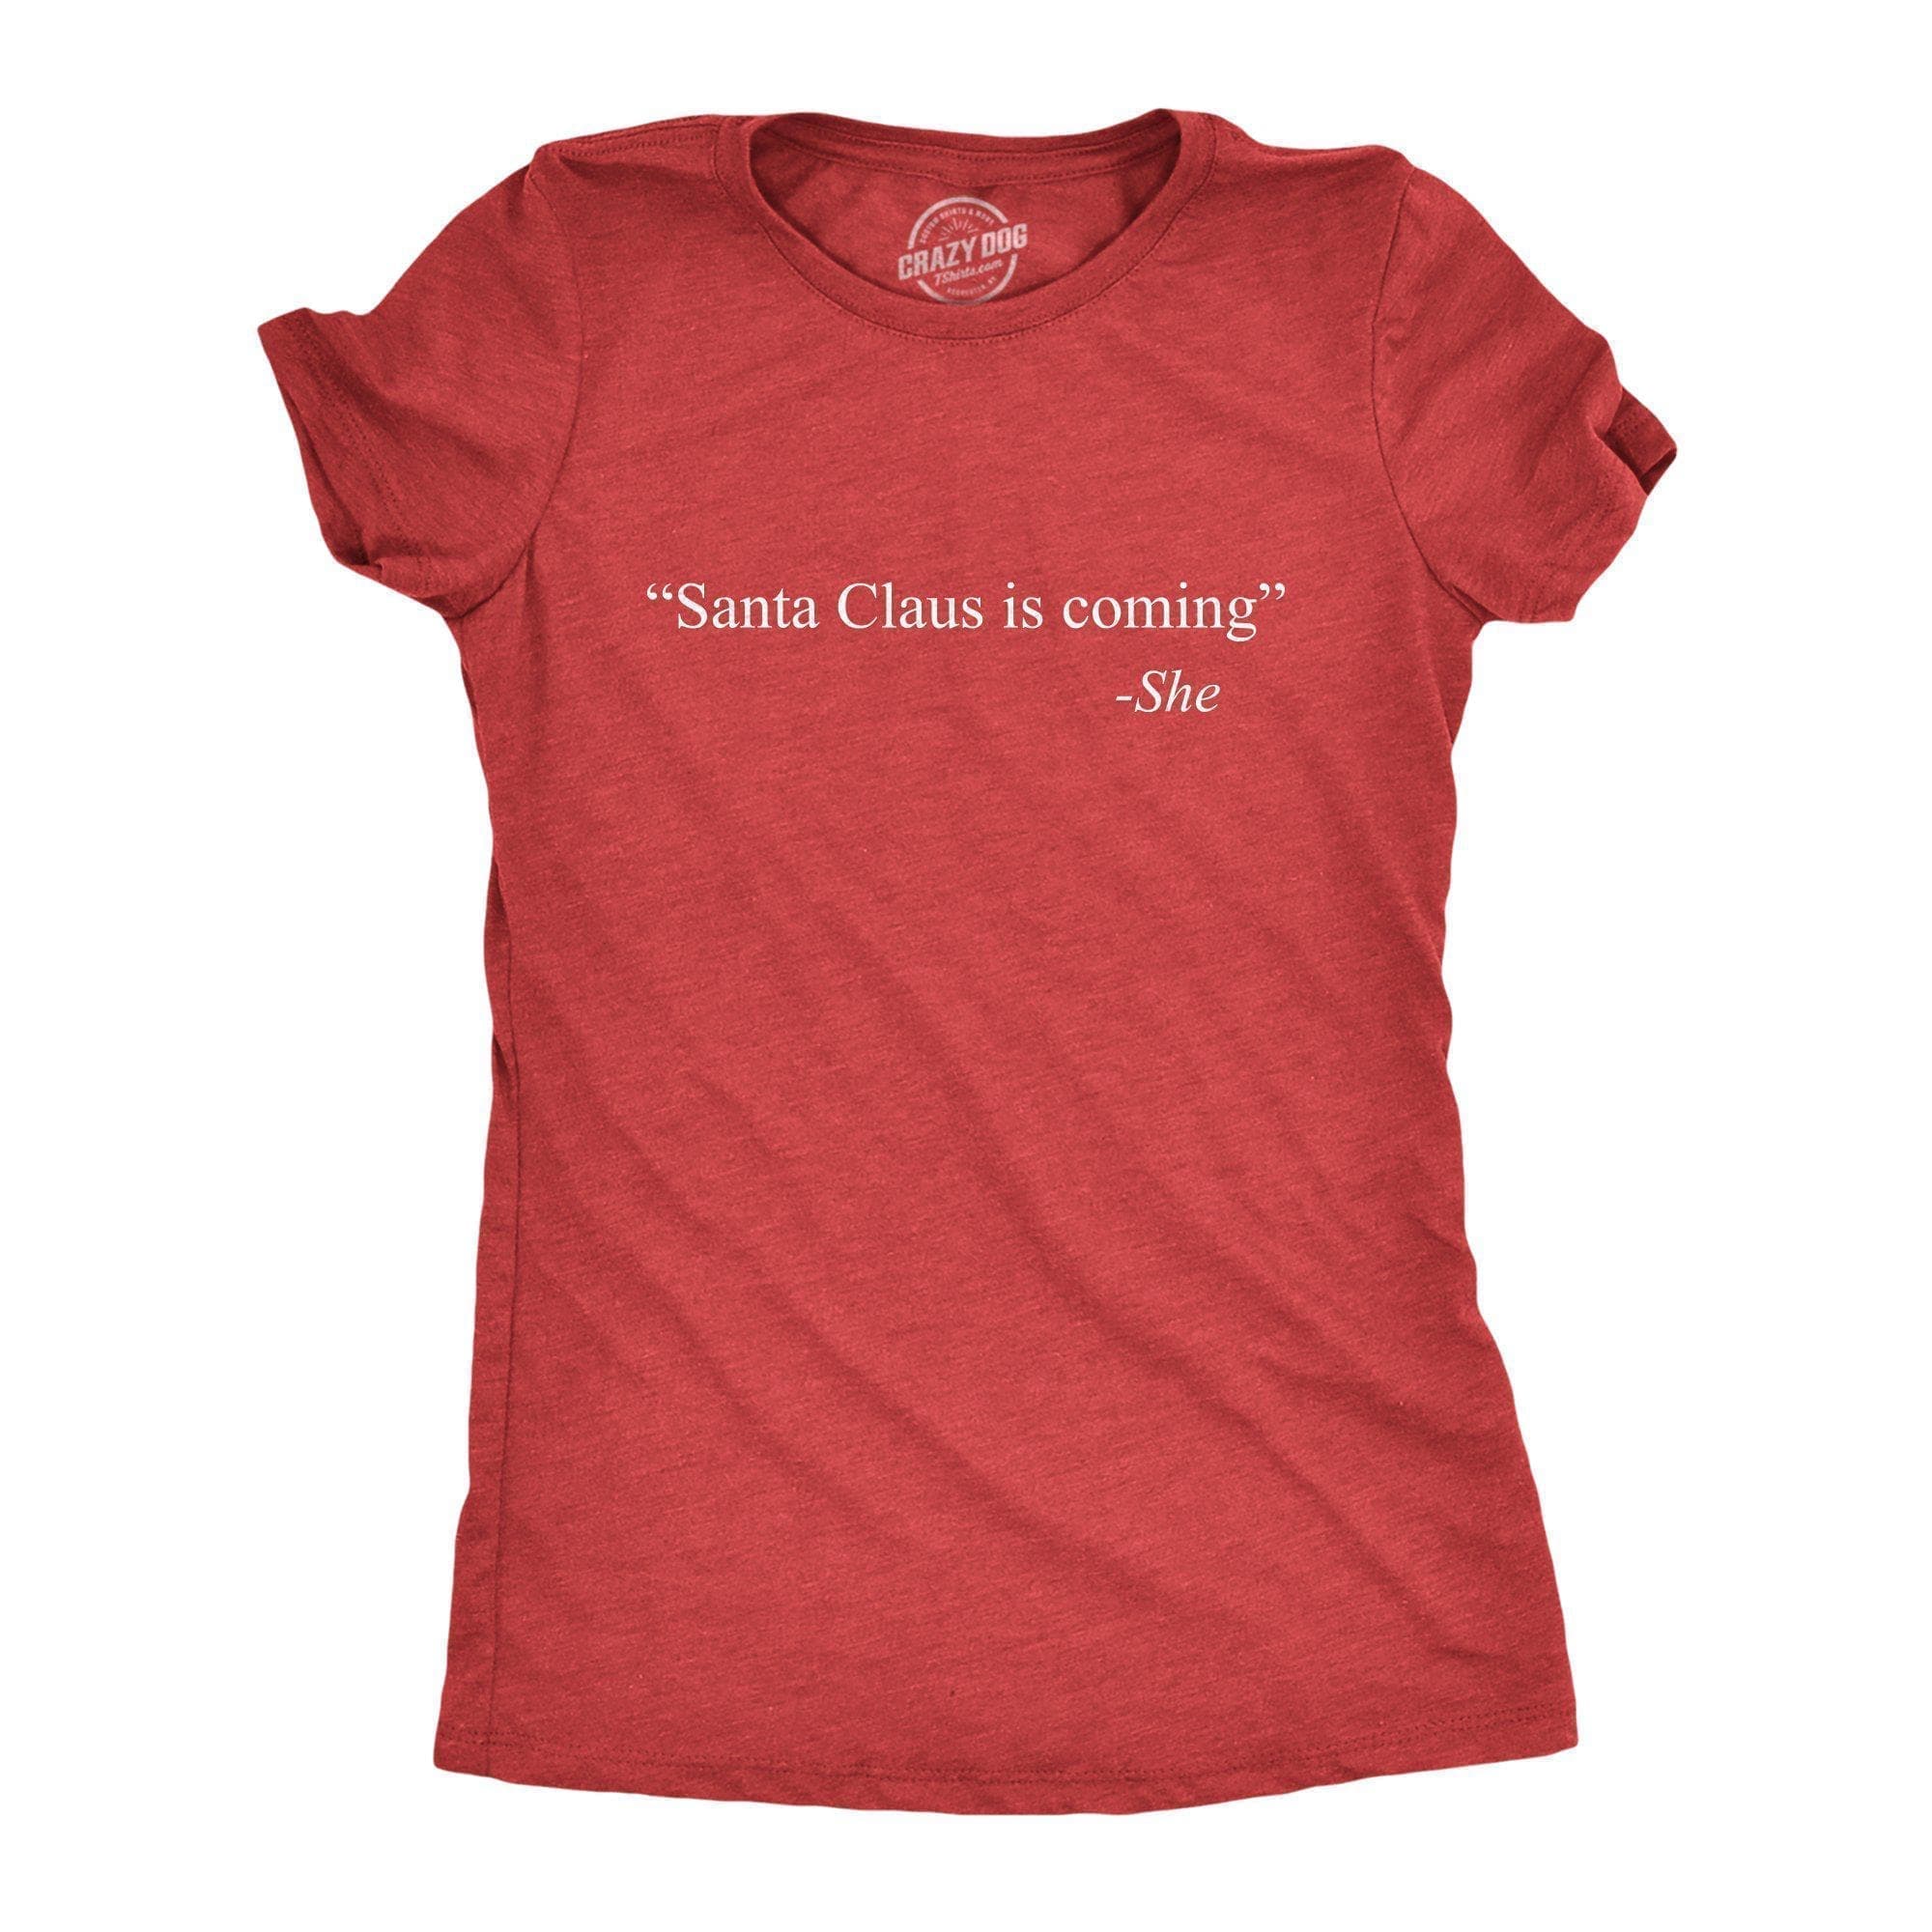 Santa Claus Is Coming -She Women's Tshirt - Crazy Dog T-Shirts